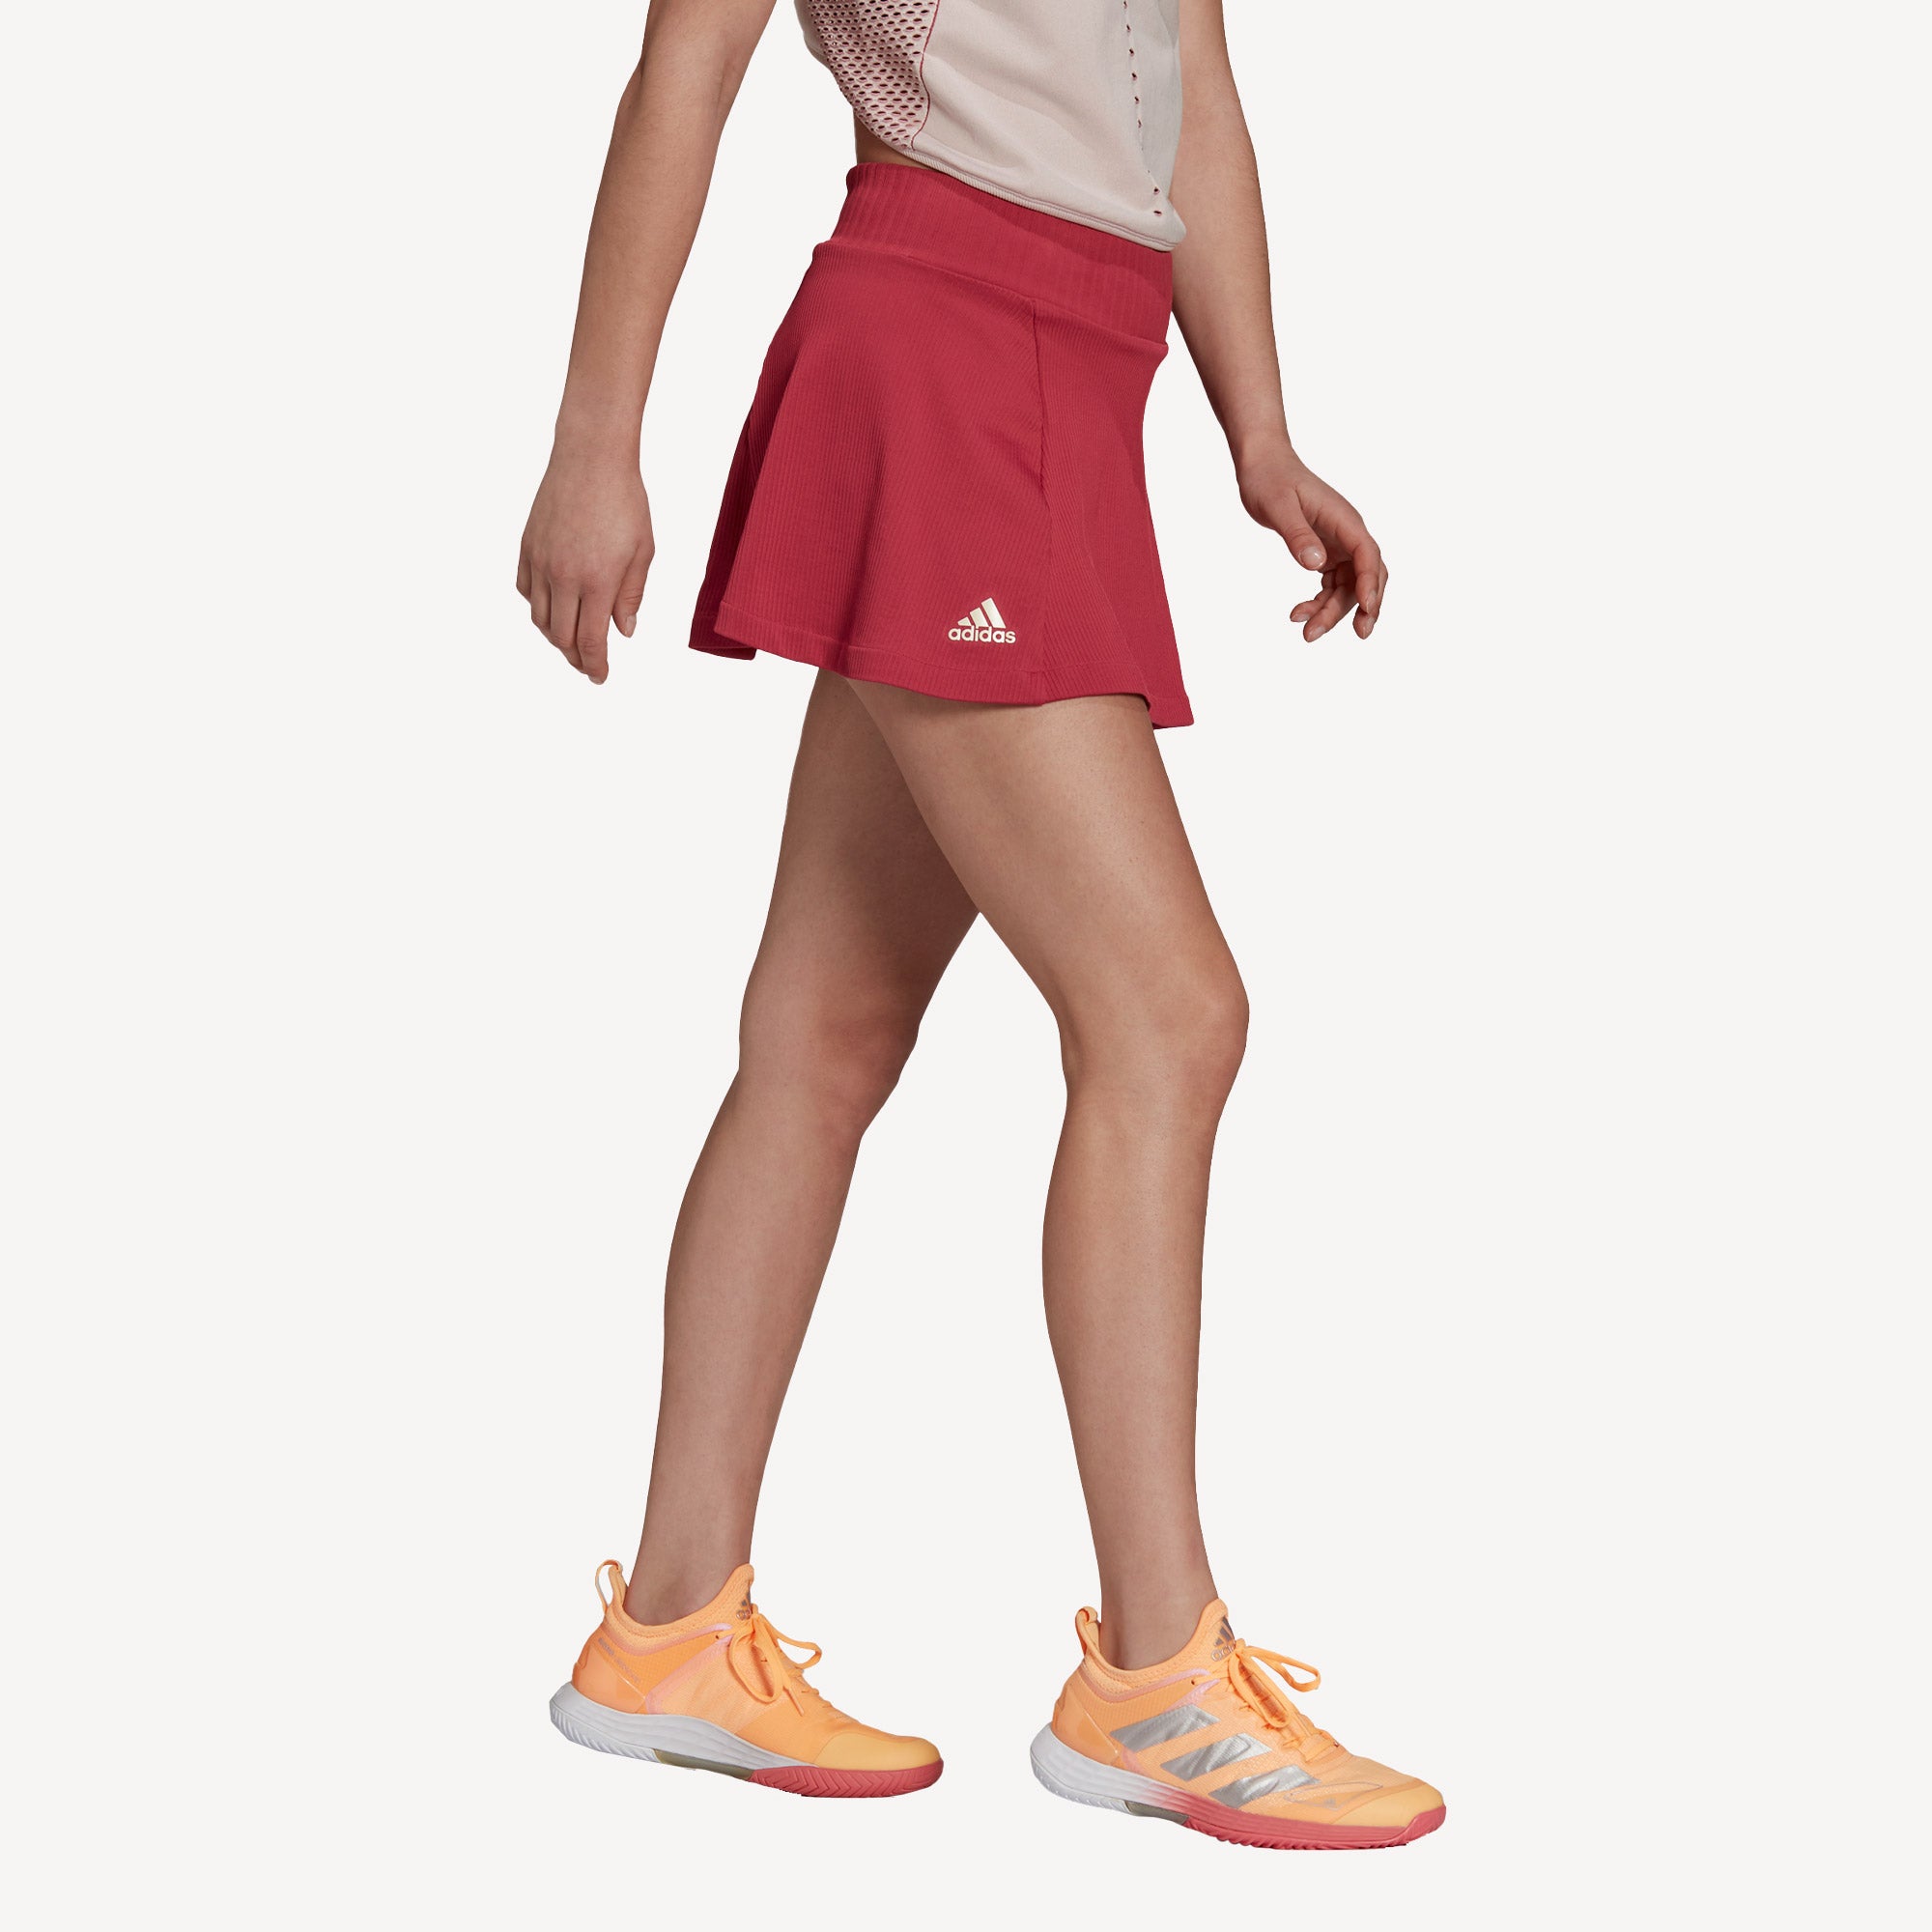 adidas Primeknit Primeblue Women's Tennis Skirt Pink (3)